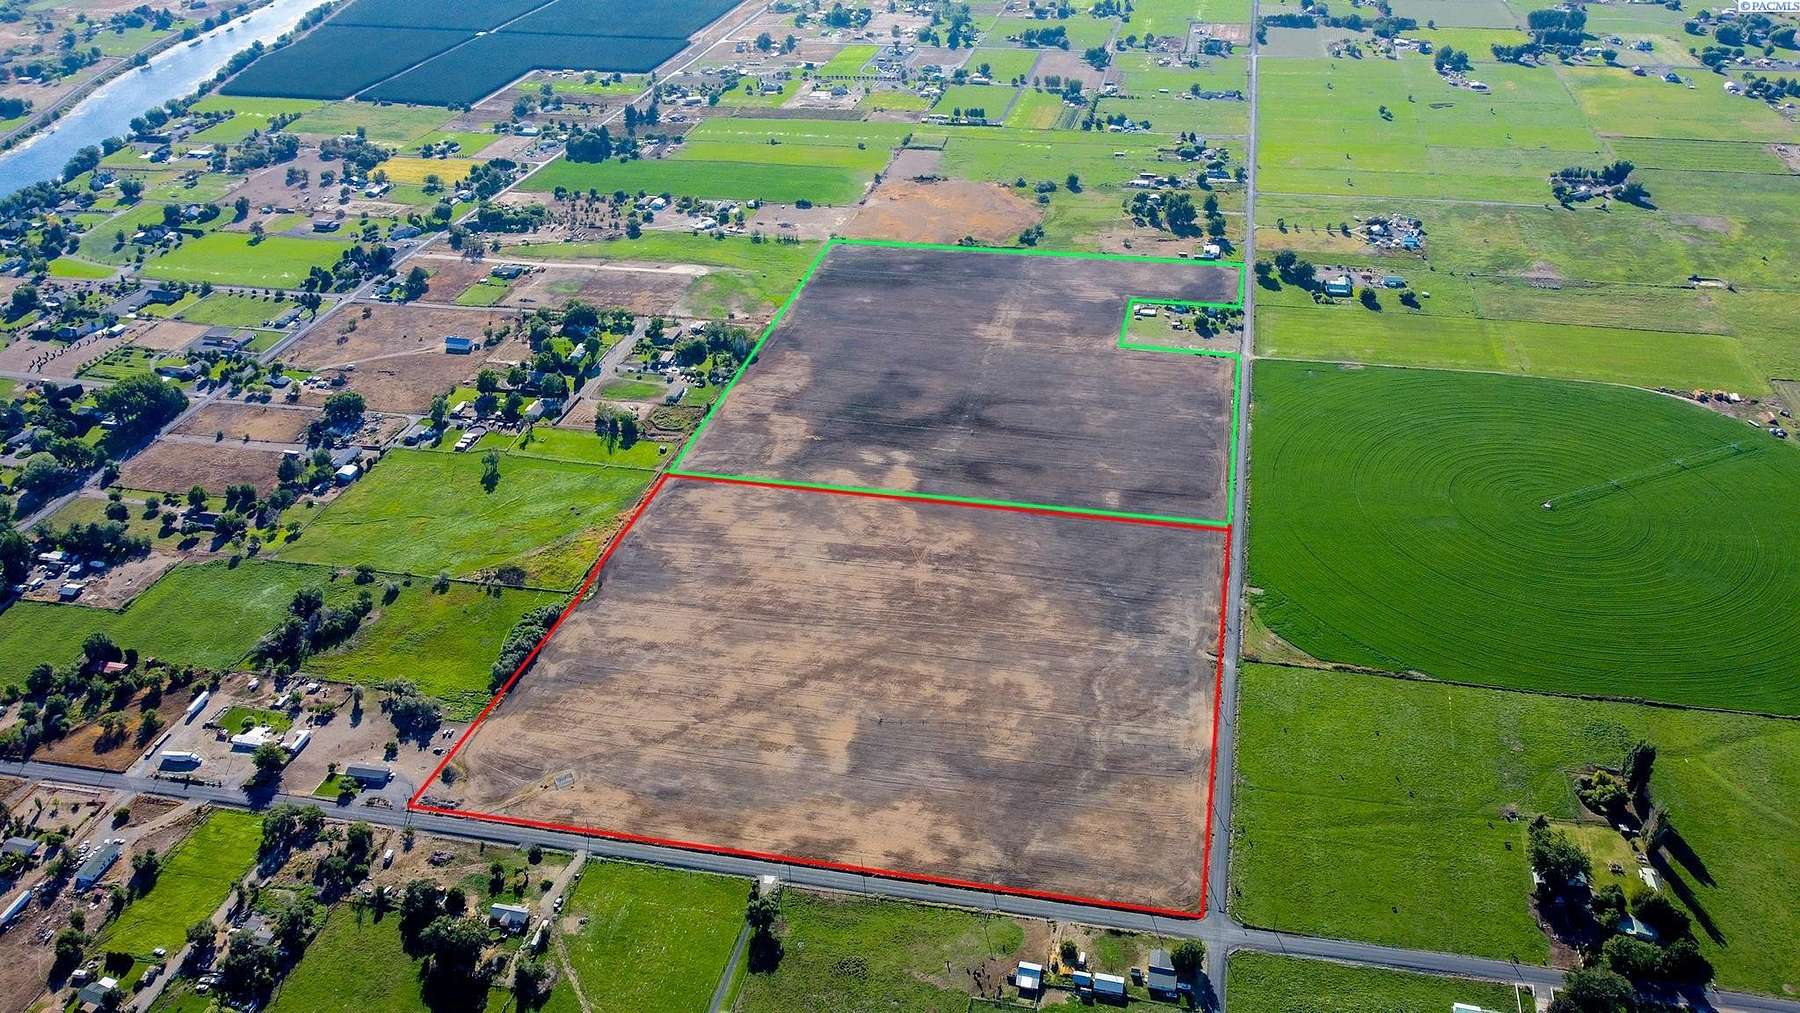 39.7 Acres of Land for Sale in Prosser, Washington